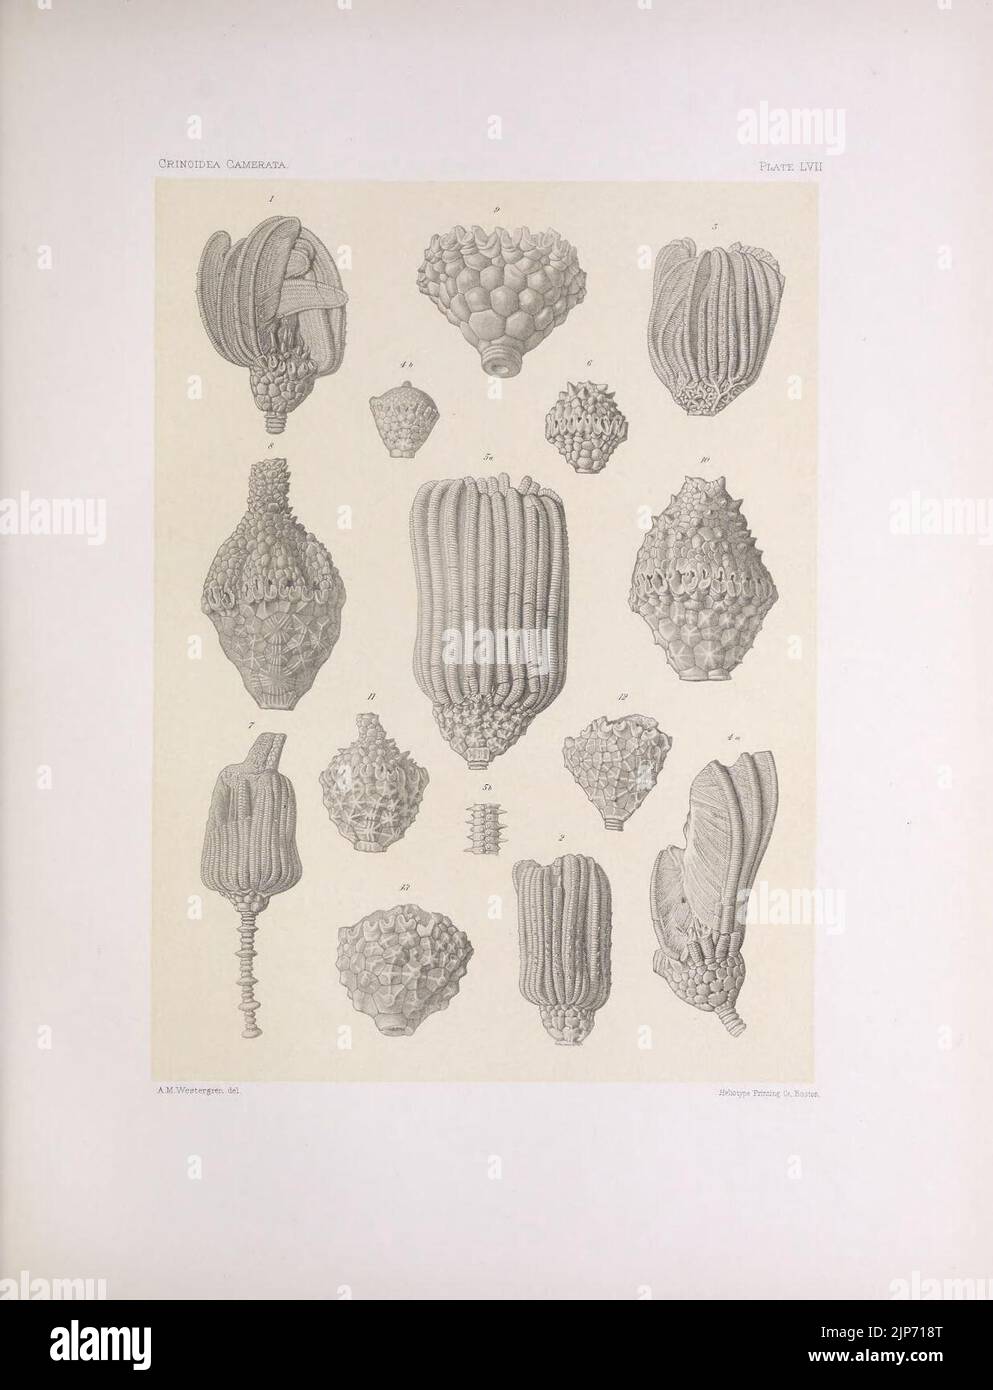 Le North American Crinoidea camerata (PLANCHE LVII) (7401859170) Banque D'Images